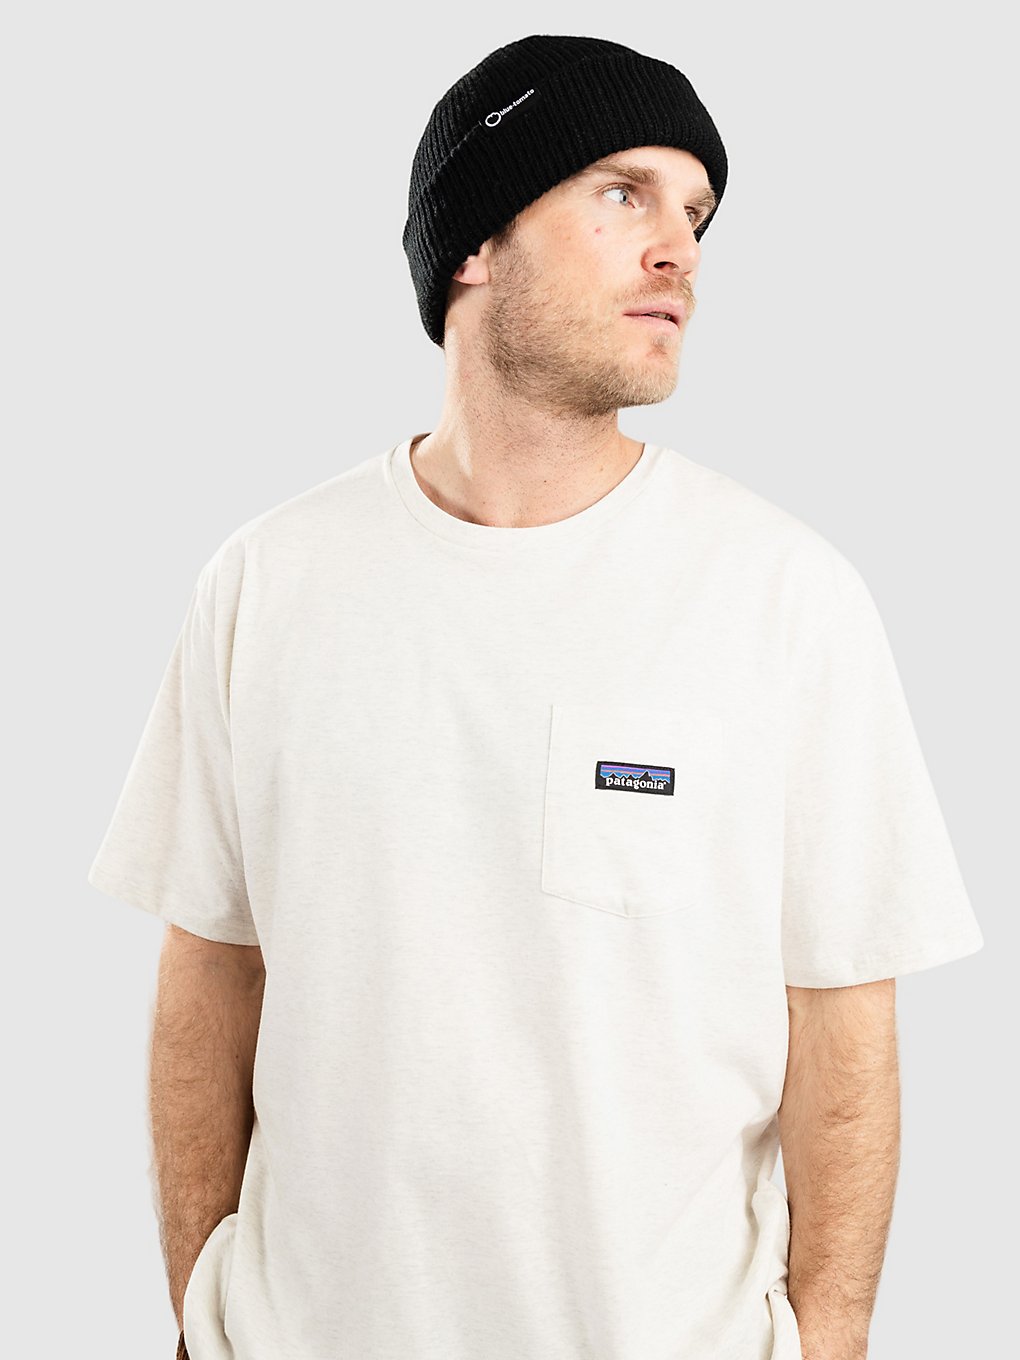 Patagonia Daily Pocket T-Shirt birch white kaufen